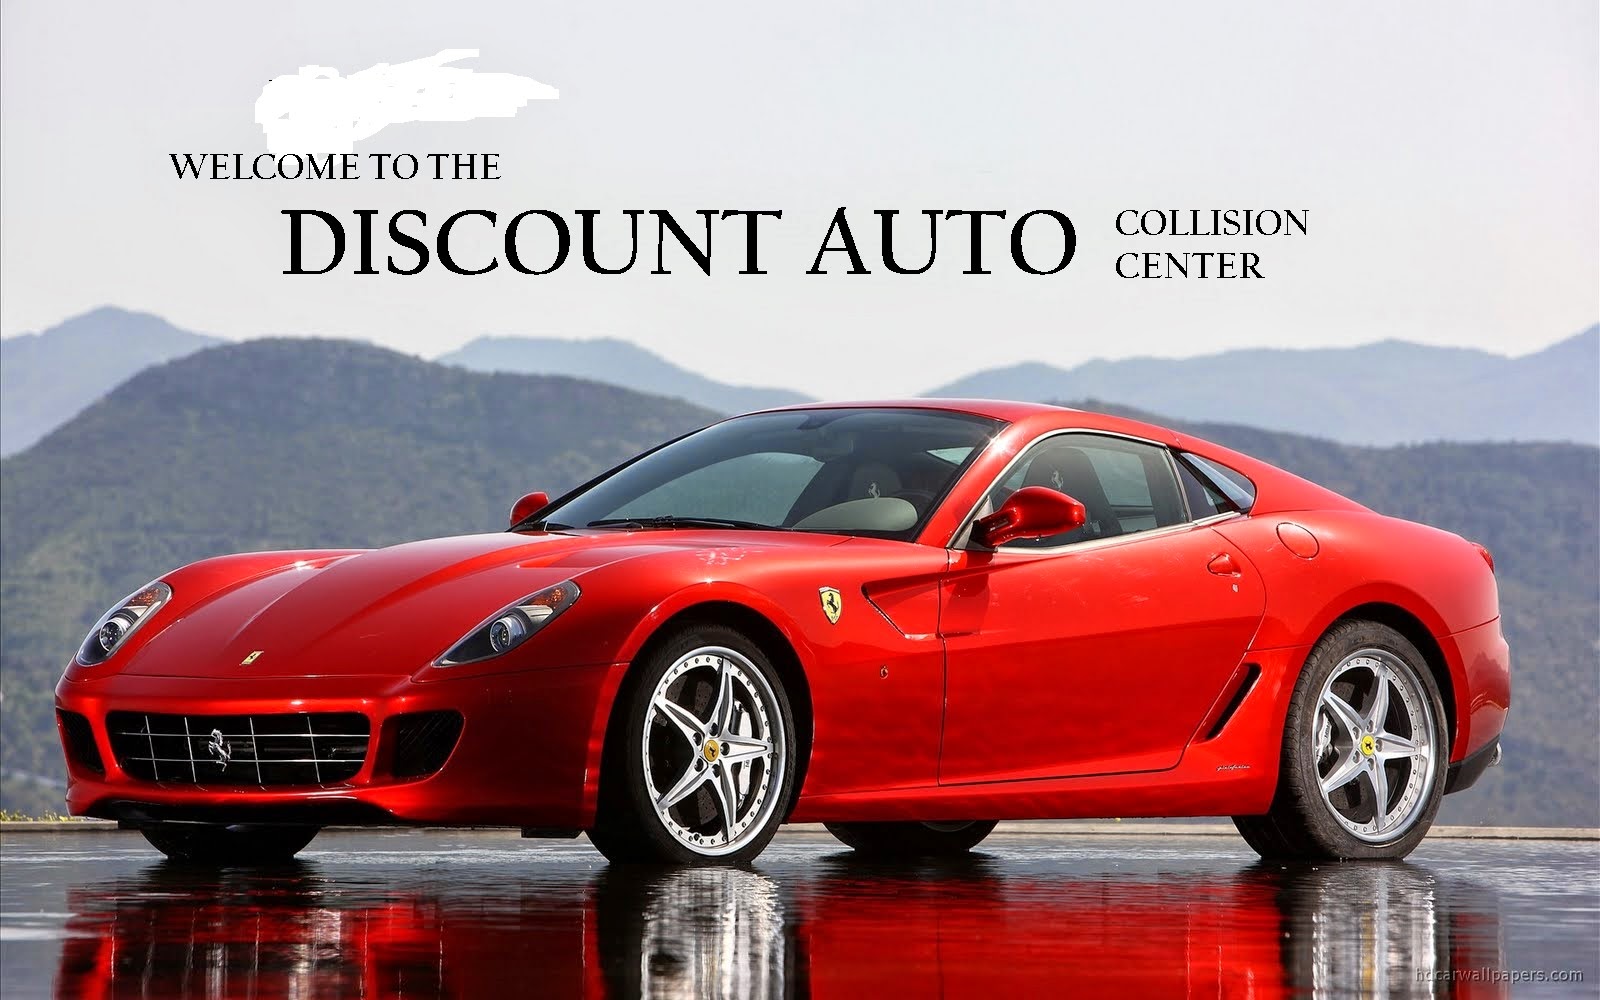 Discount Auto Inc